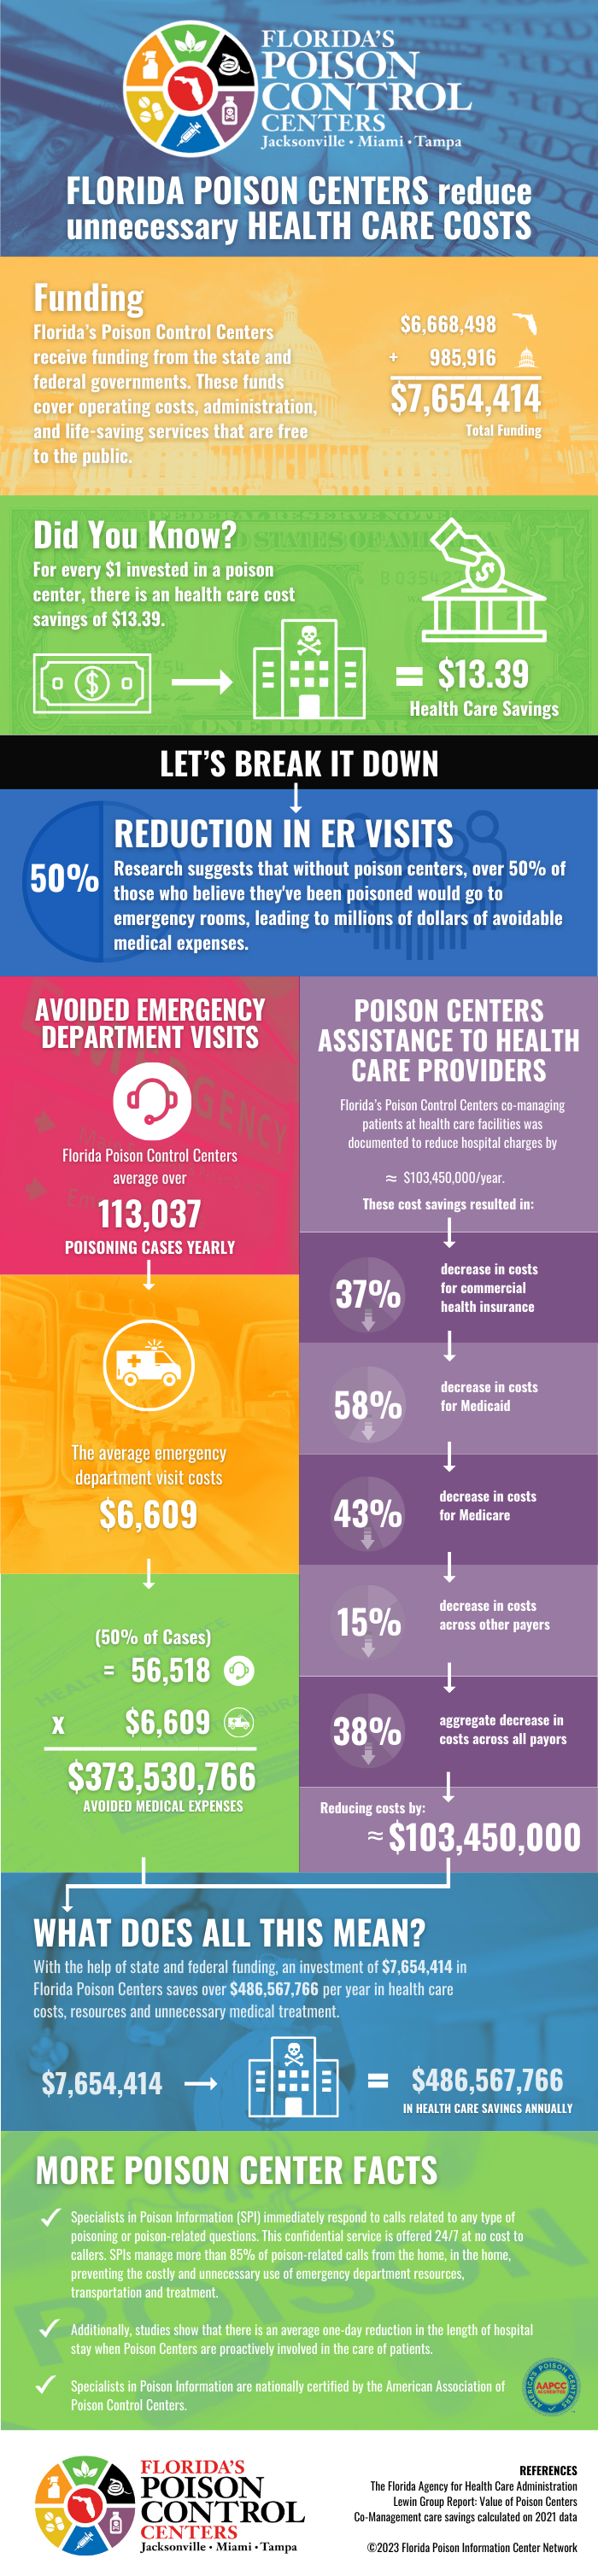 Florida Poison Information Center Infographic